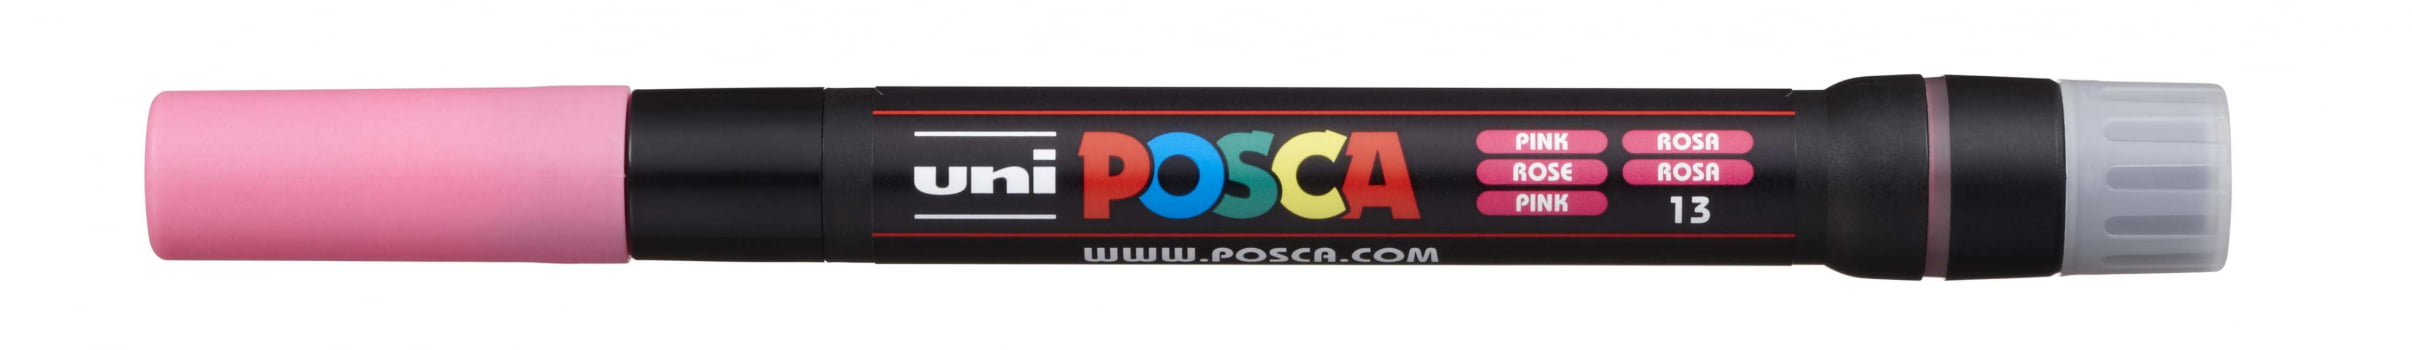 PCF-350 CANETA POSCA ROSA